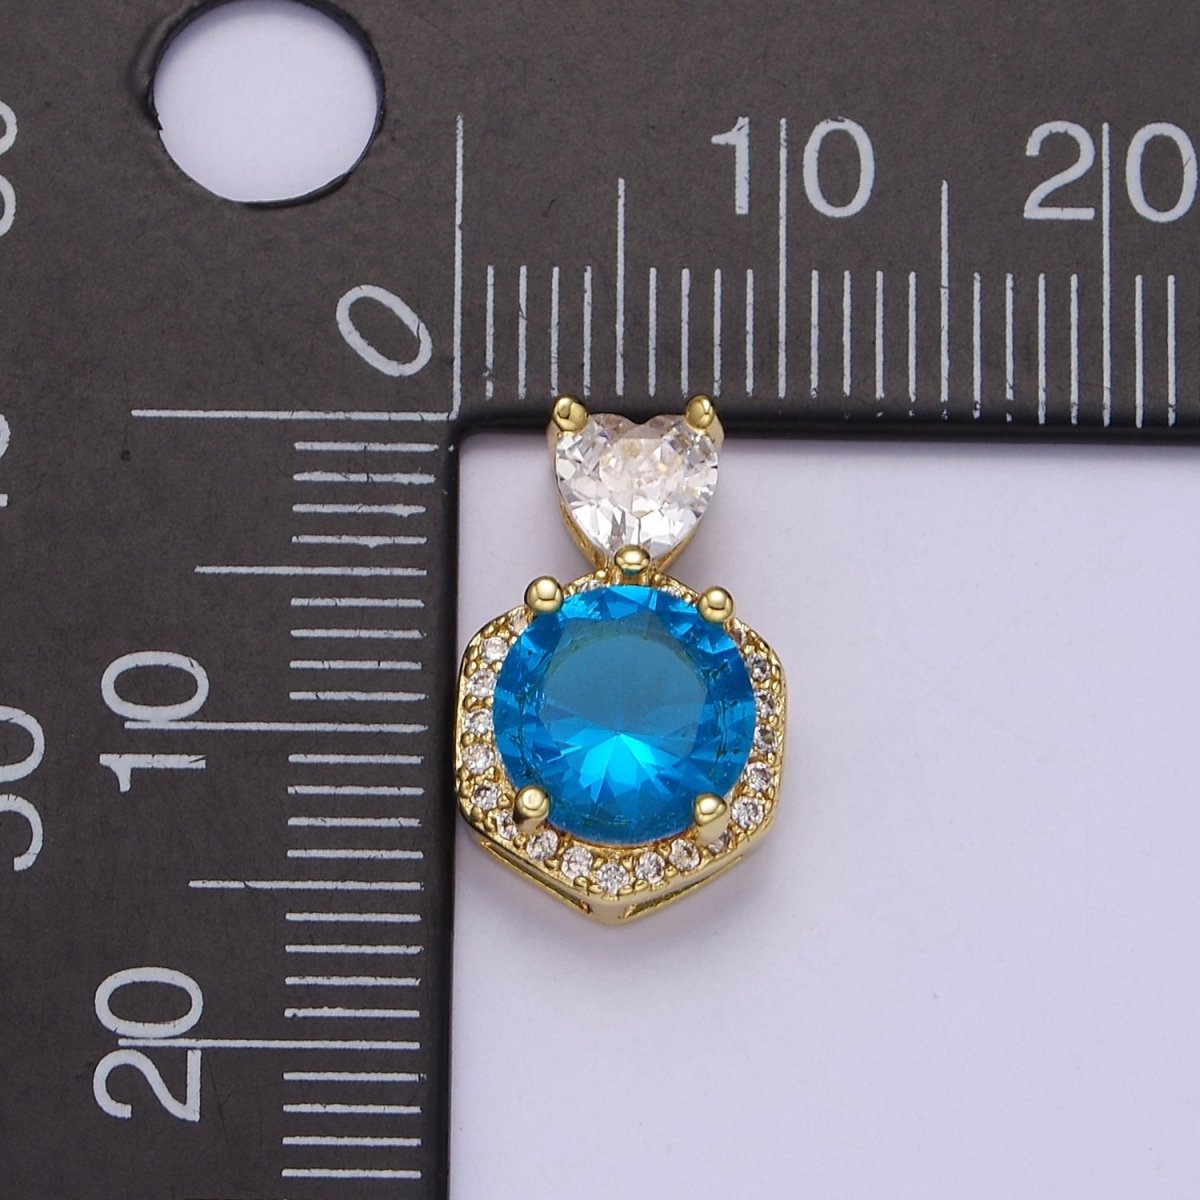 Multicolor Round Cubic Zirconia CZ Stone Pendant Charm with CZ Heart Bail For Jewelry Necklace Making J-567 J-568 J-569 J-575 - DLUXCA